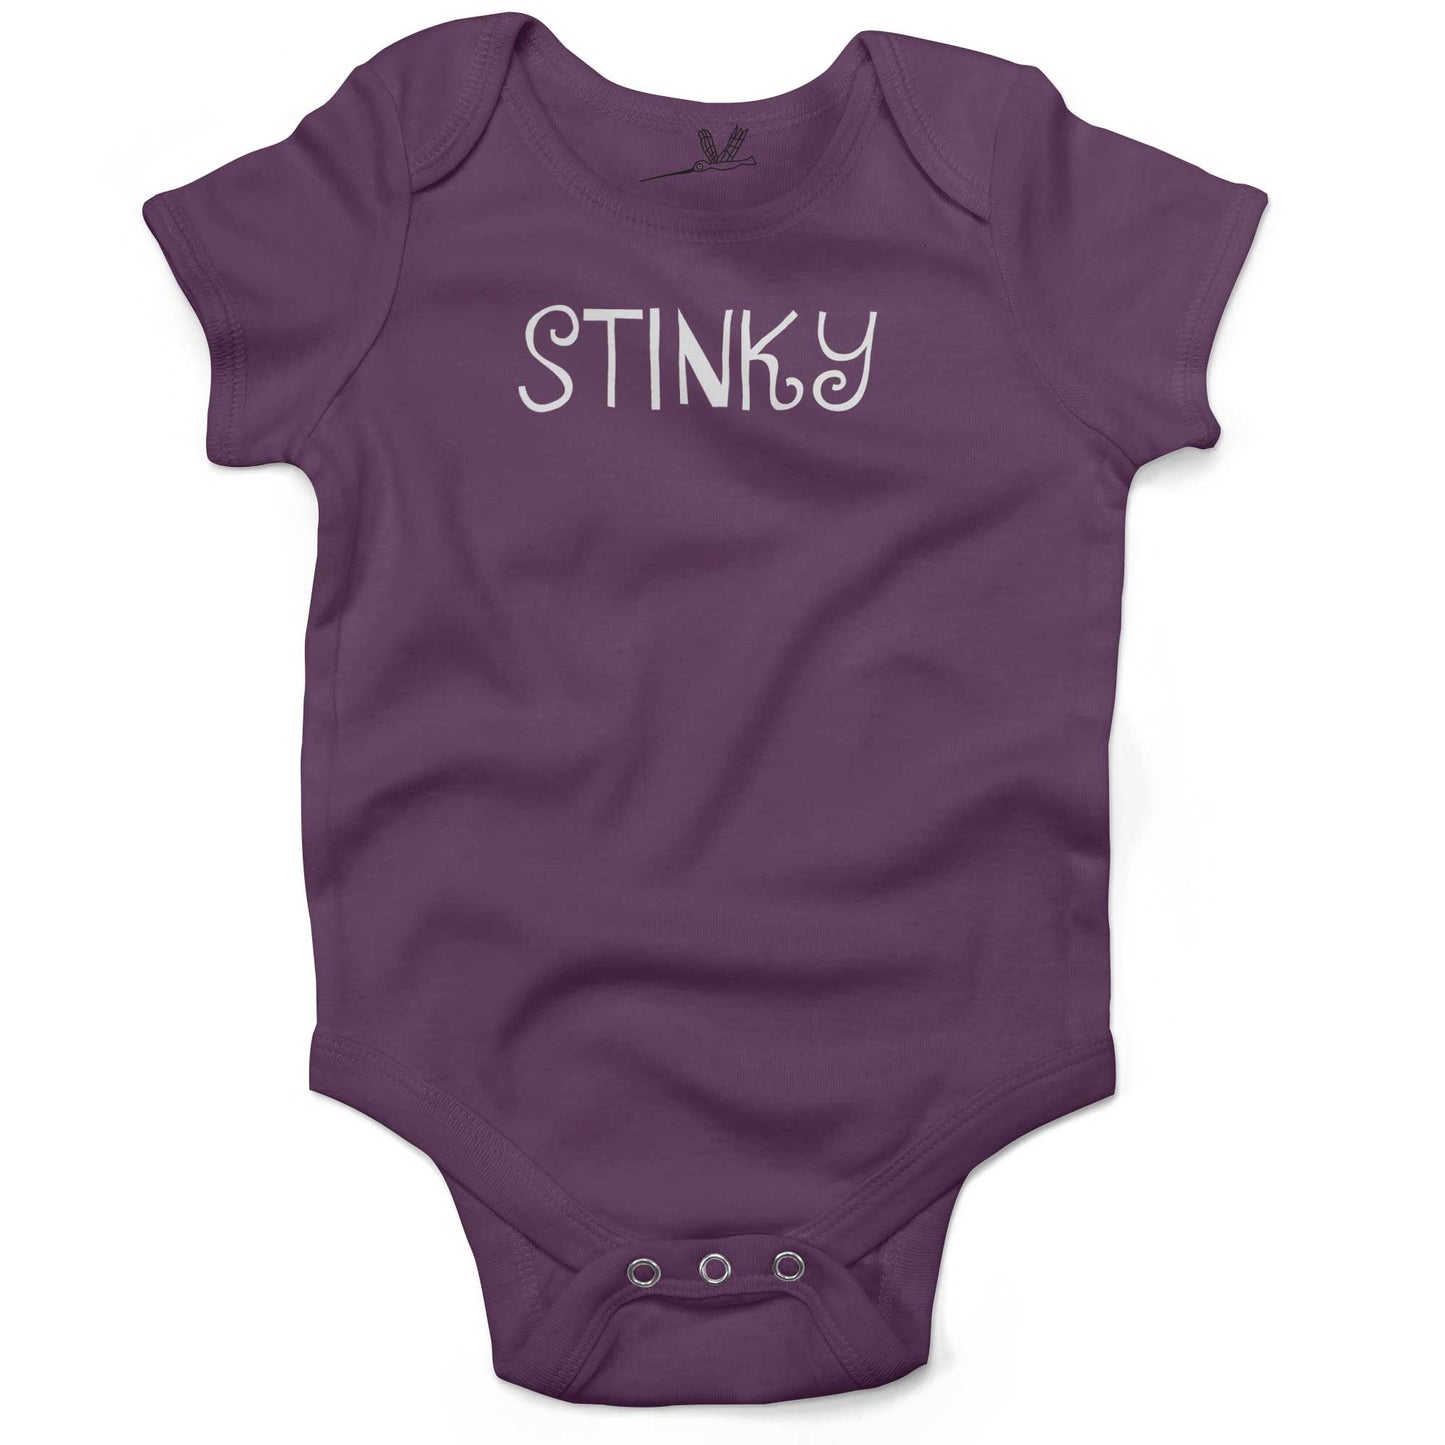 Stinky Infant Bodysuit or Raglan Baby Tee-Organic Purple-3-6 months